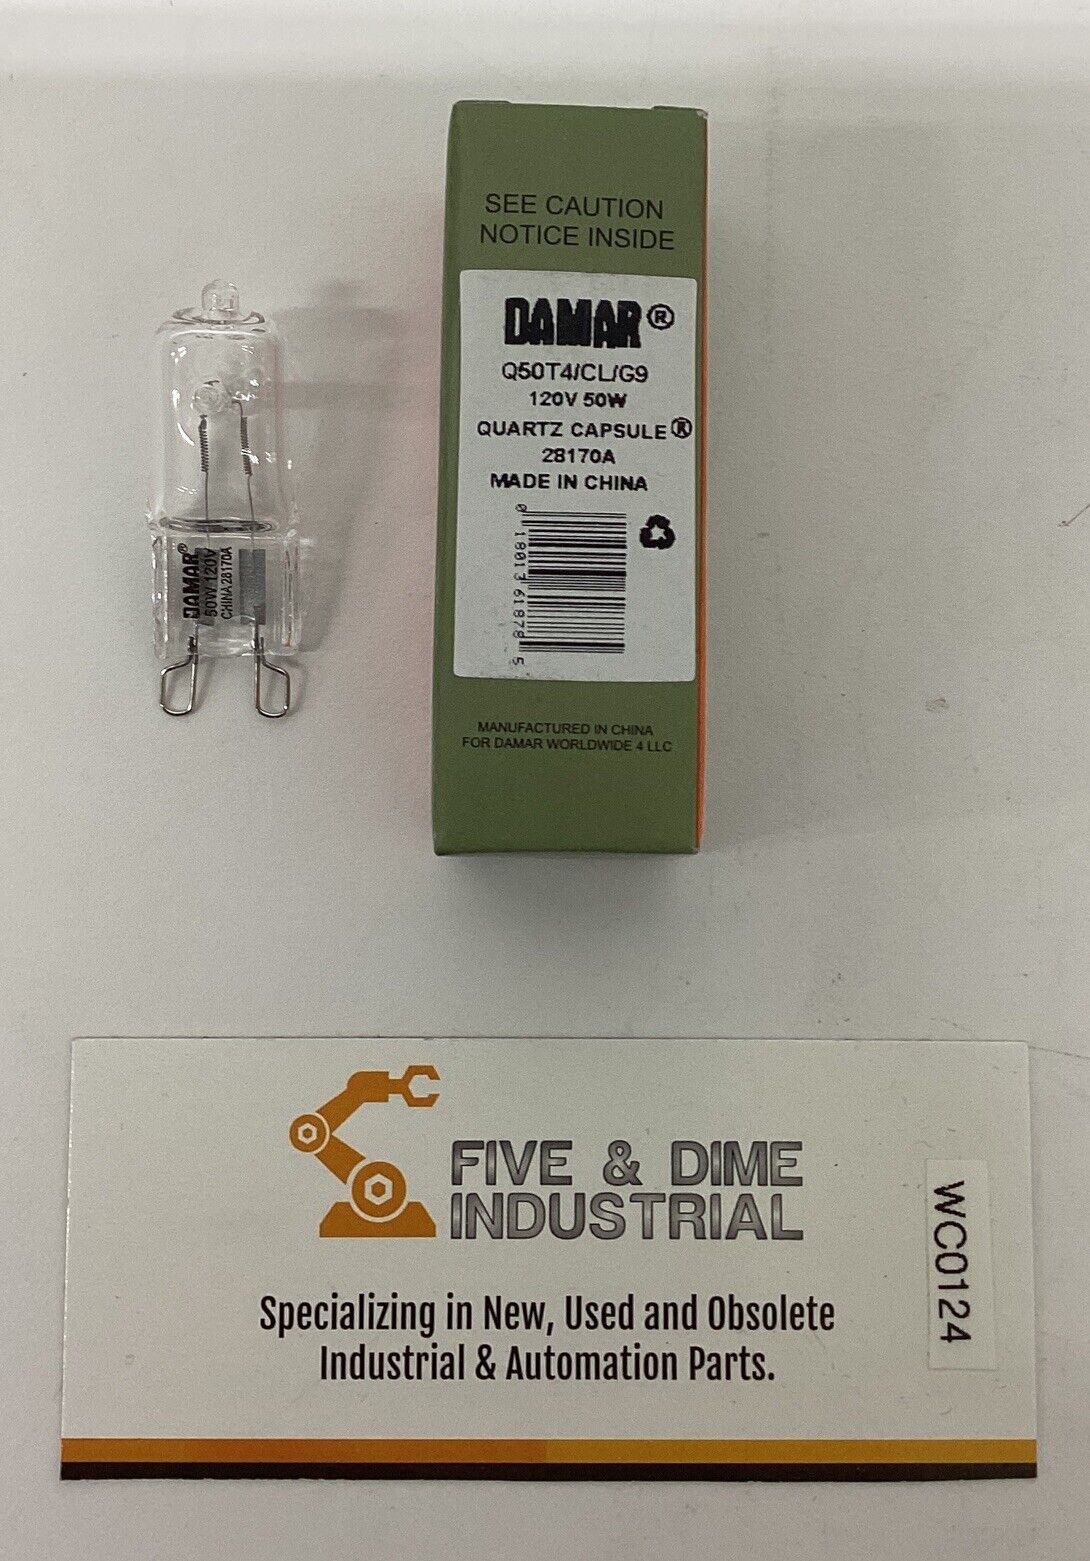 Damar Q50T4/CL/G9 Genuine Bulb 120V 50W NEW (CL186)